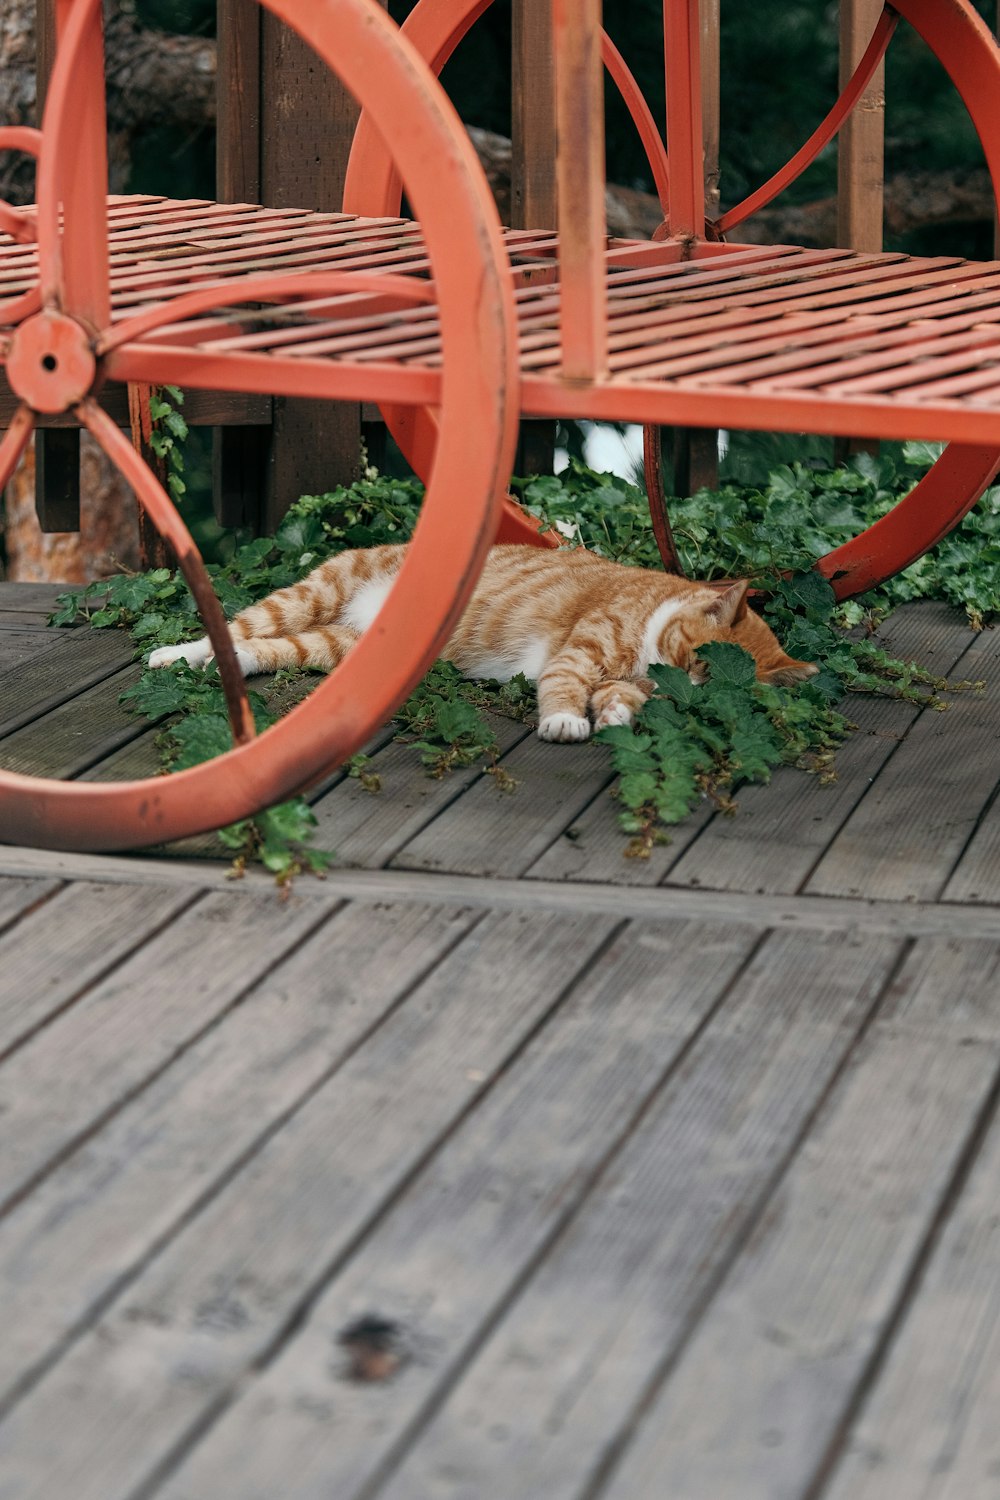 orange tabby cat lying on brown wooden floor